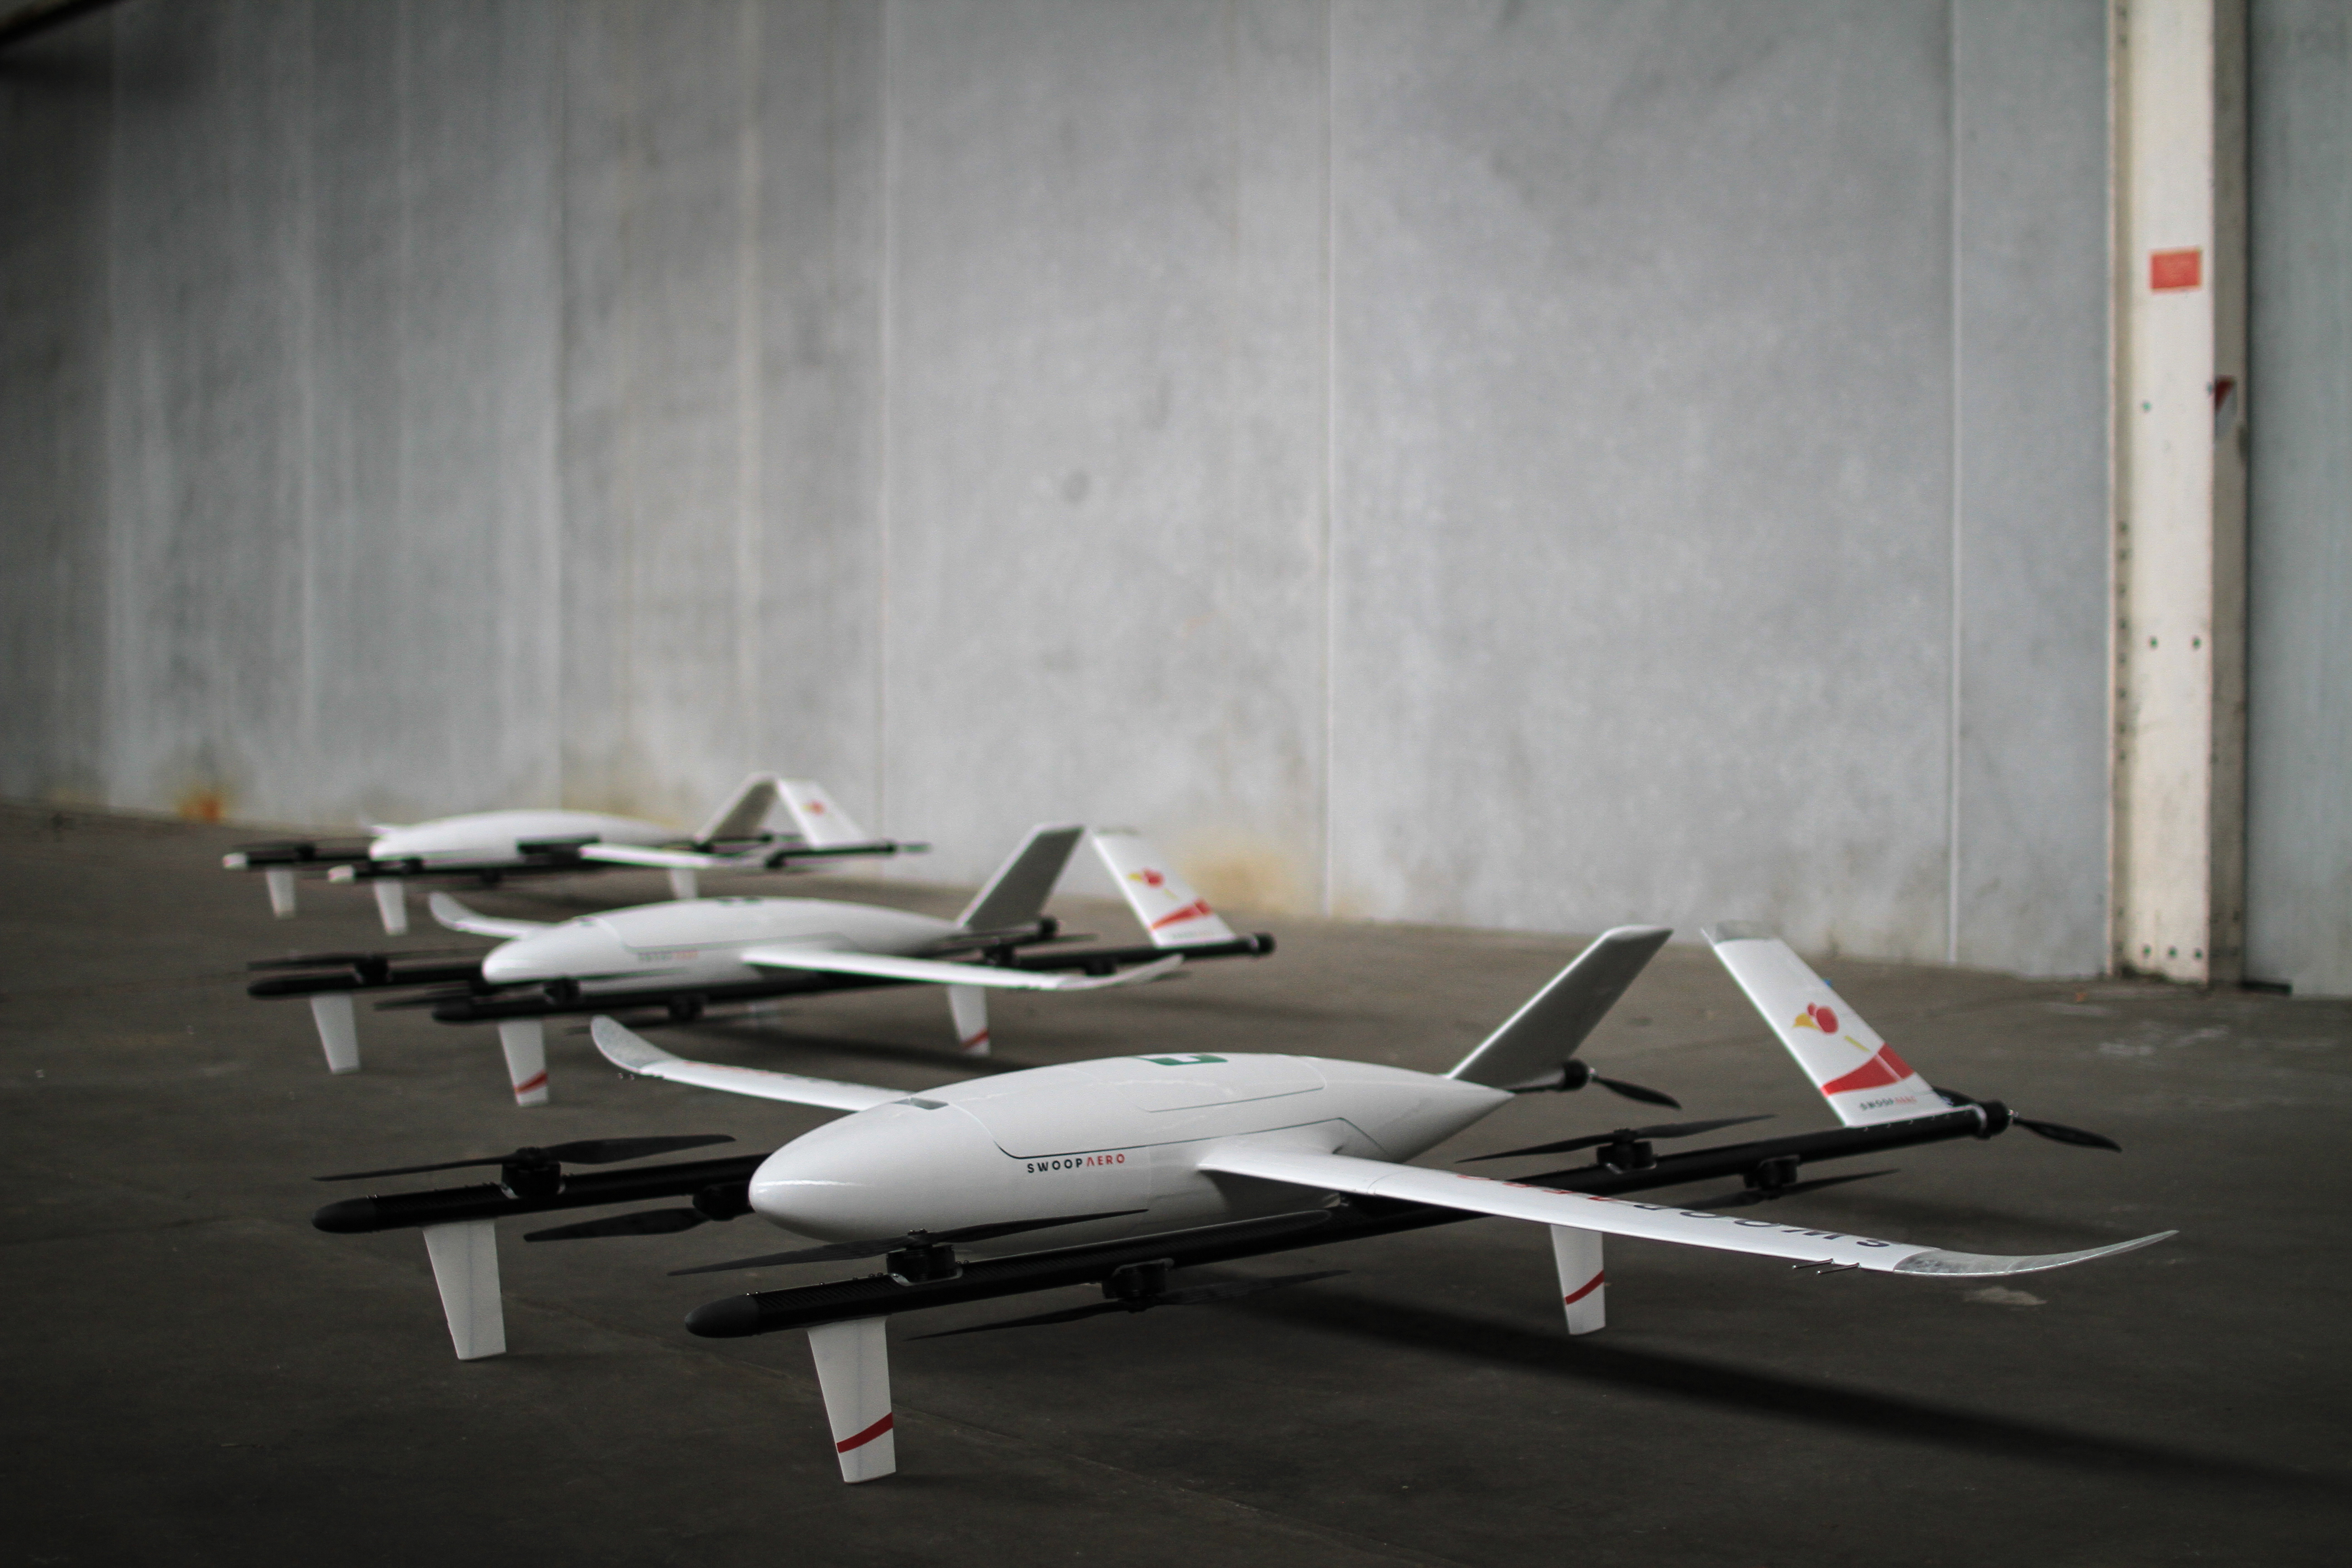 Drone races and the future of autonomous systems - Scientifica